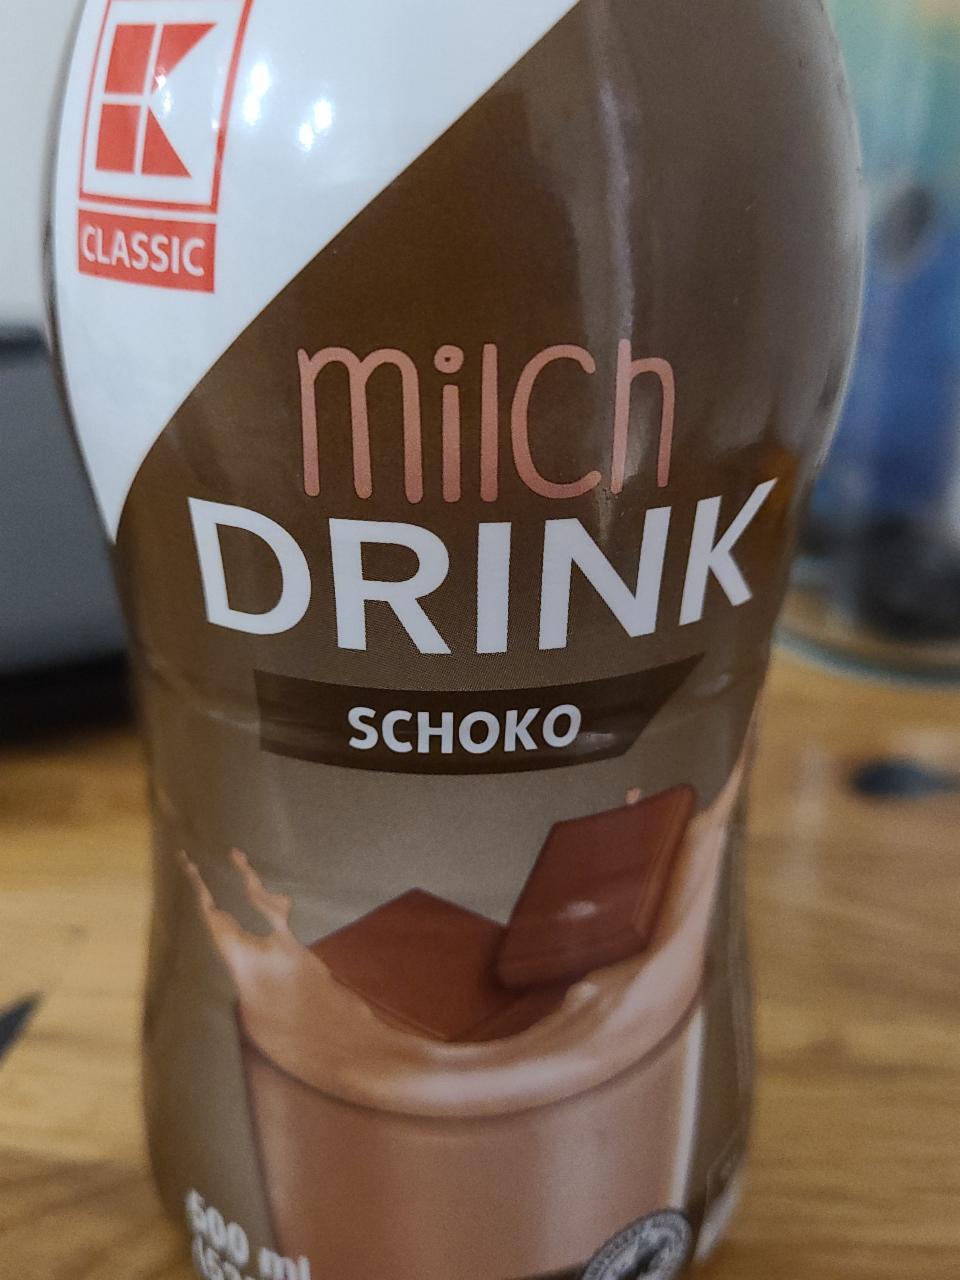 Fotografie - Milch drink Schoko K-Classic